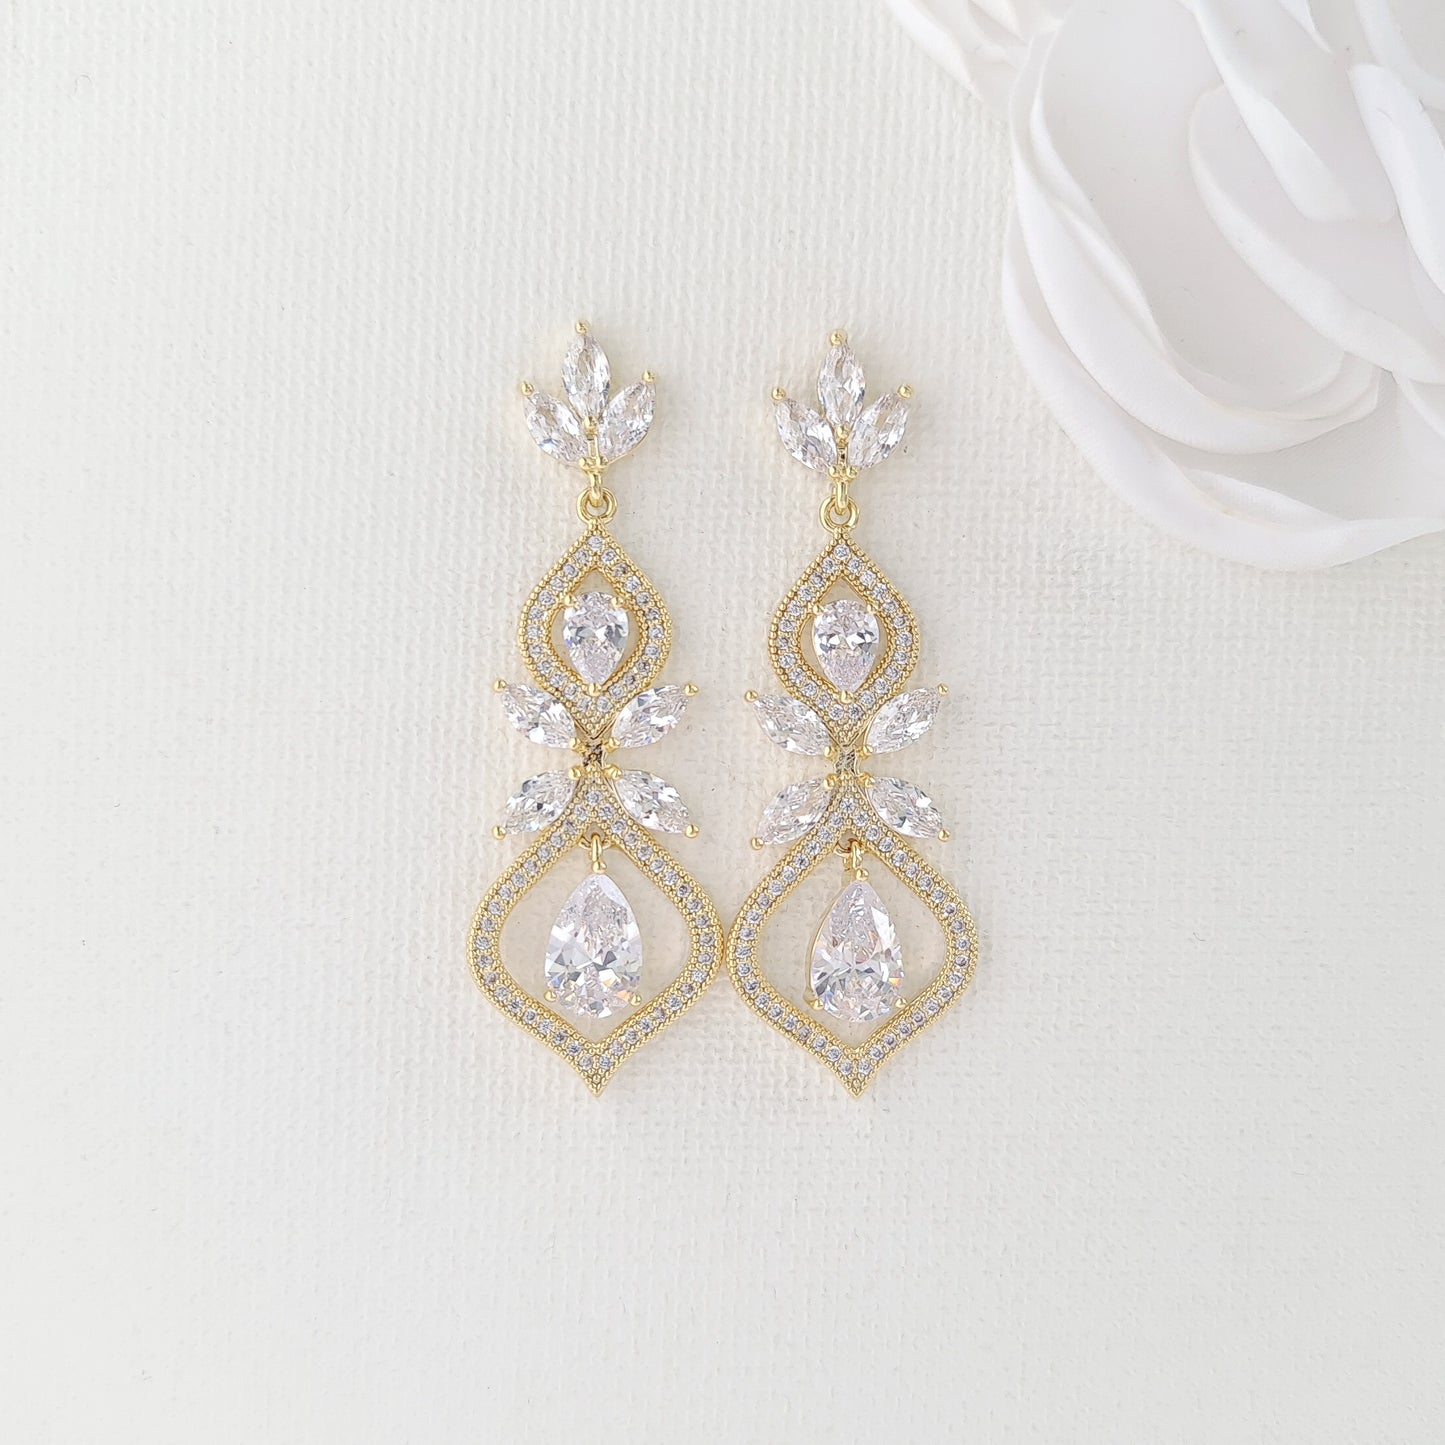 Rose Gold Bridal Back Jewelry Set with Drop Earrings Slider Bracelet Backdrop Necklace- Meghan